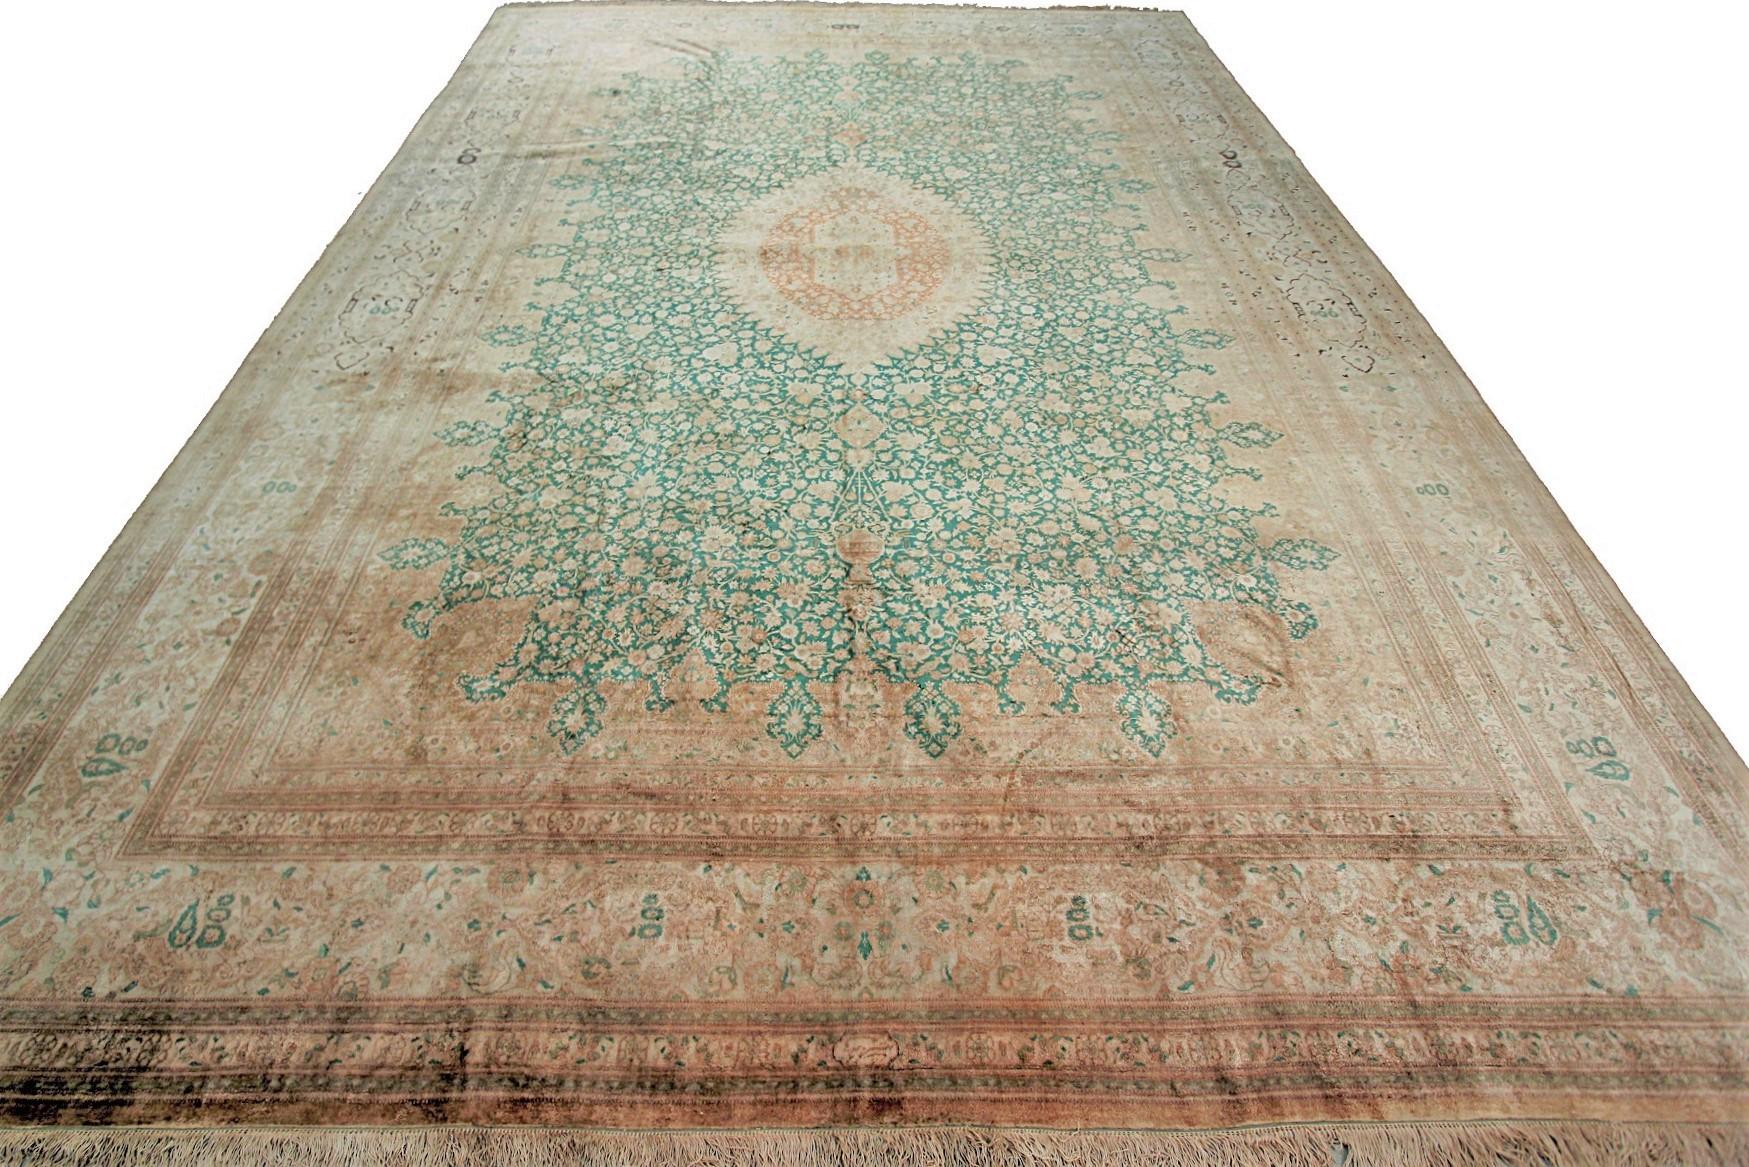 Signed Silk Ghom Jamshidi rare fine authentic silk handmade rug high quality signed soft green 
10' x 13'6